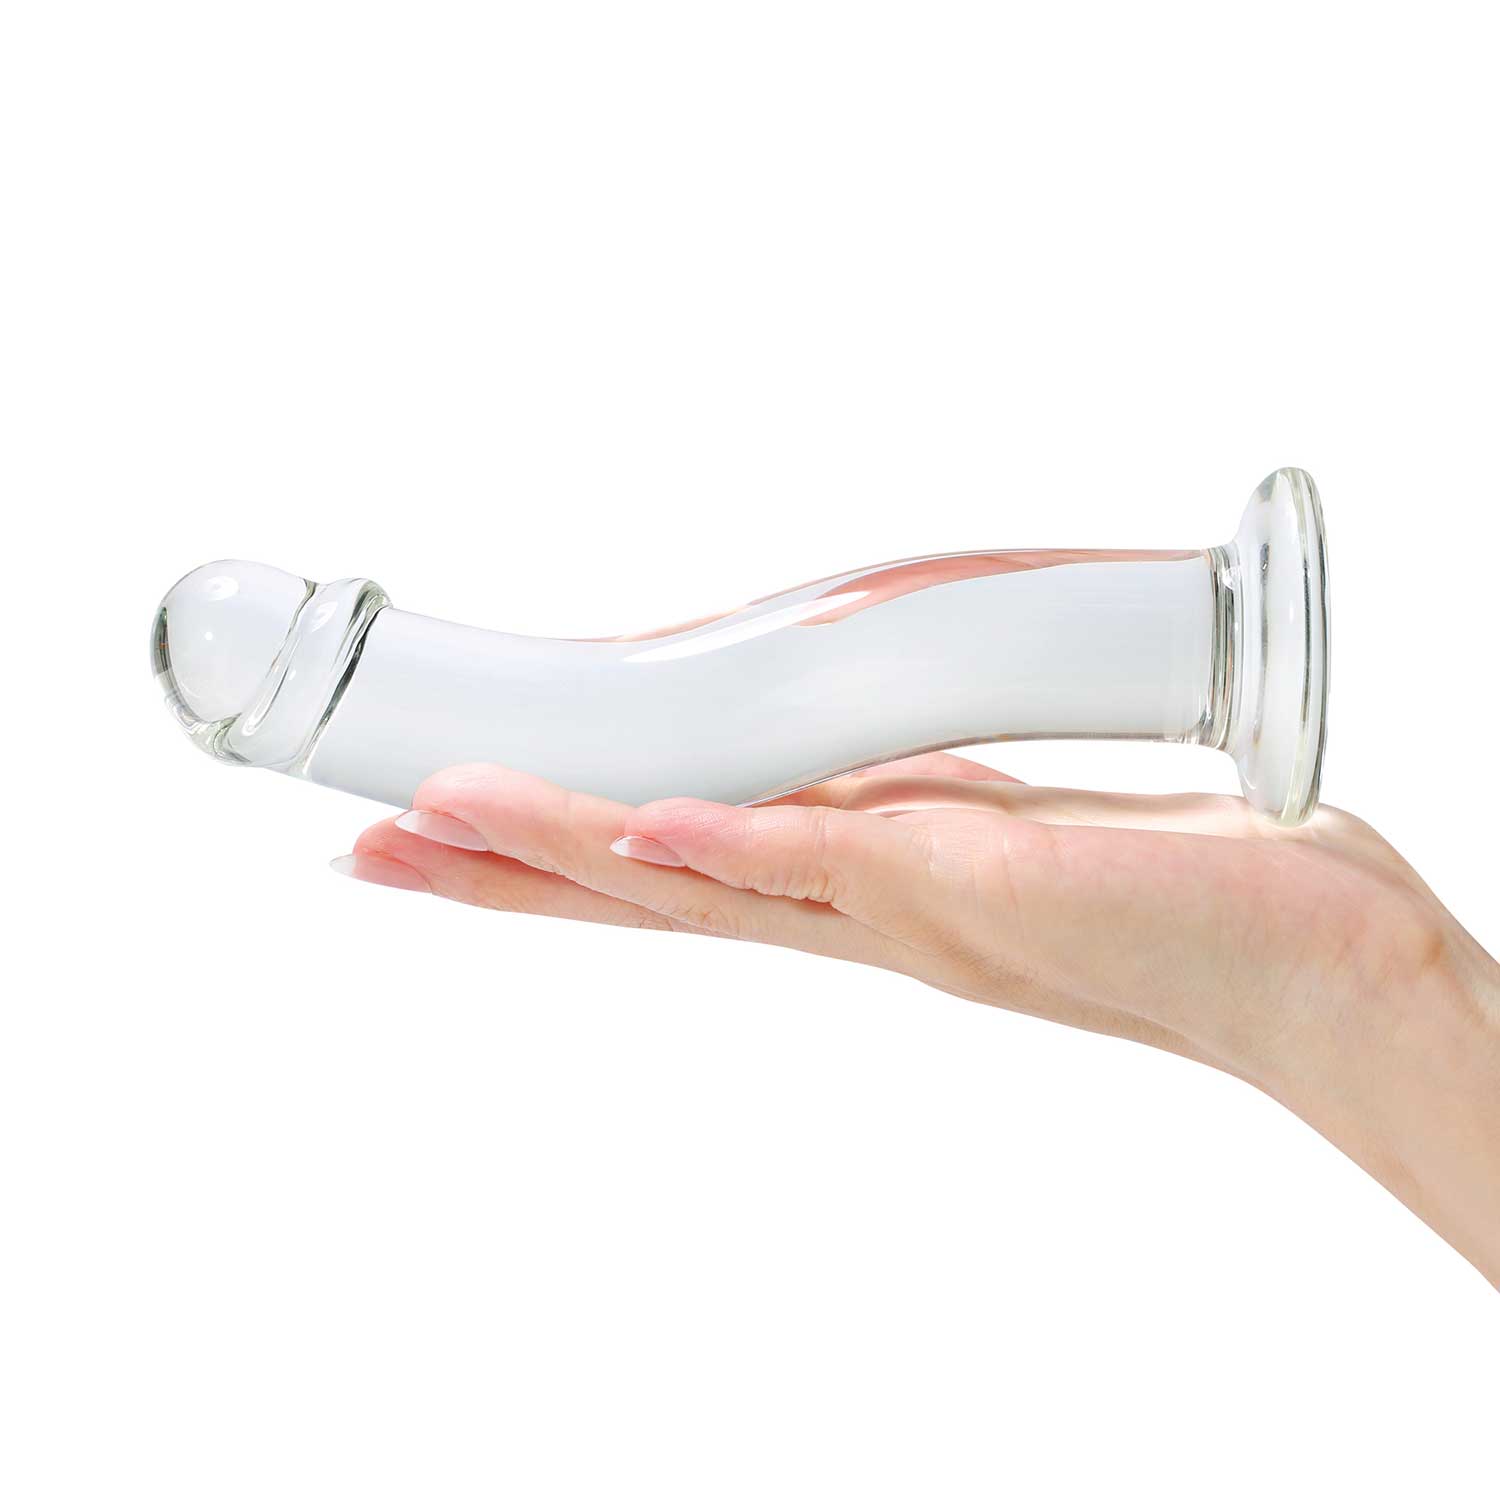 Realistic curved glass dildo - KRIS-06